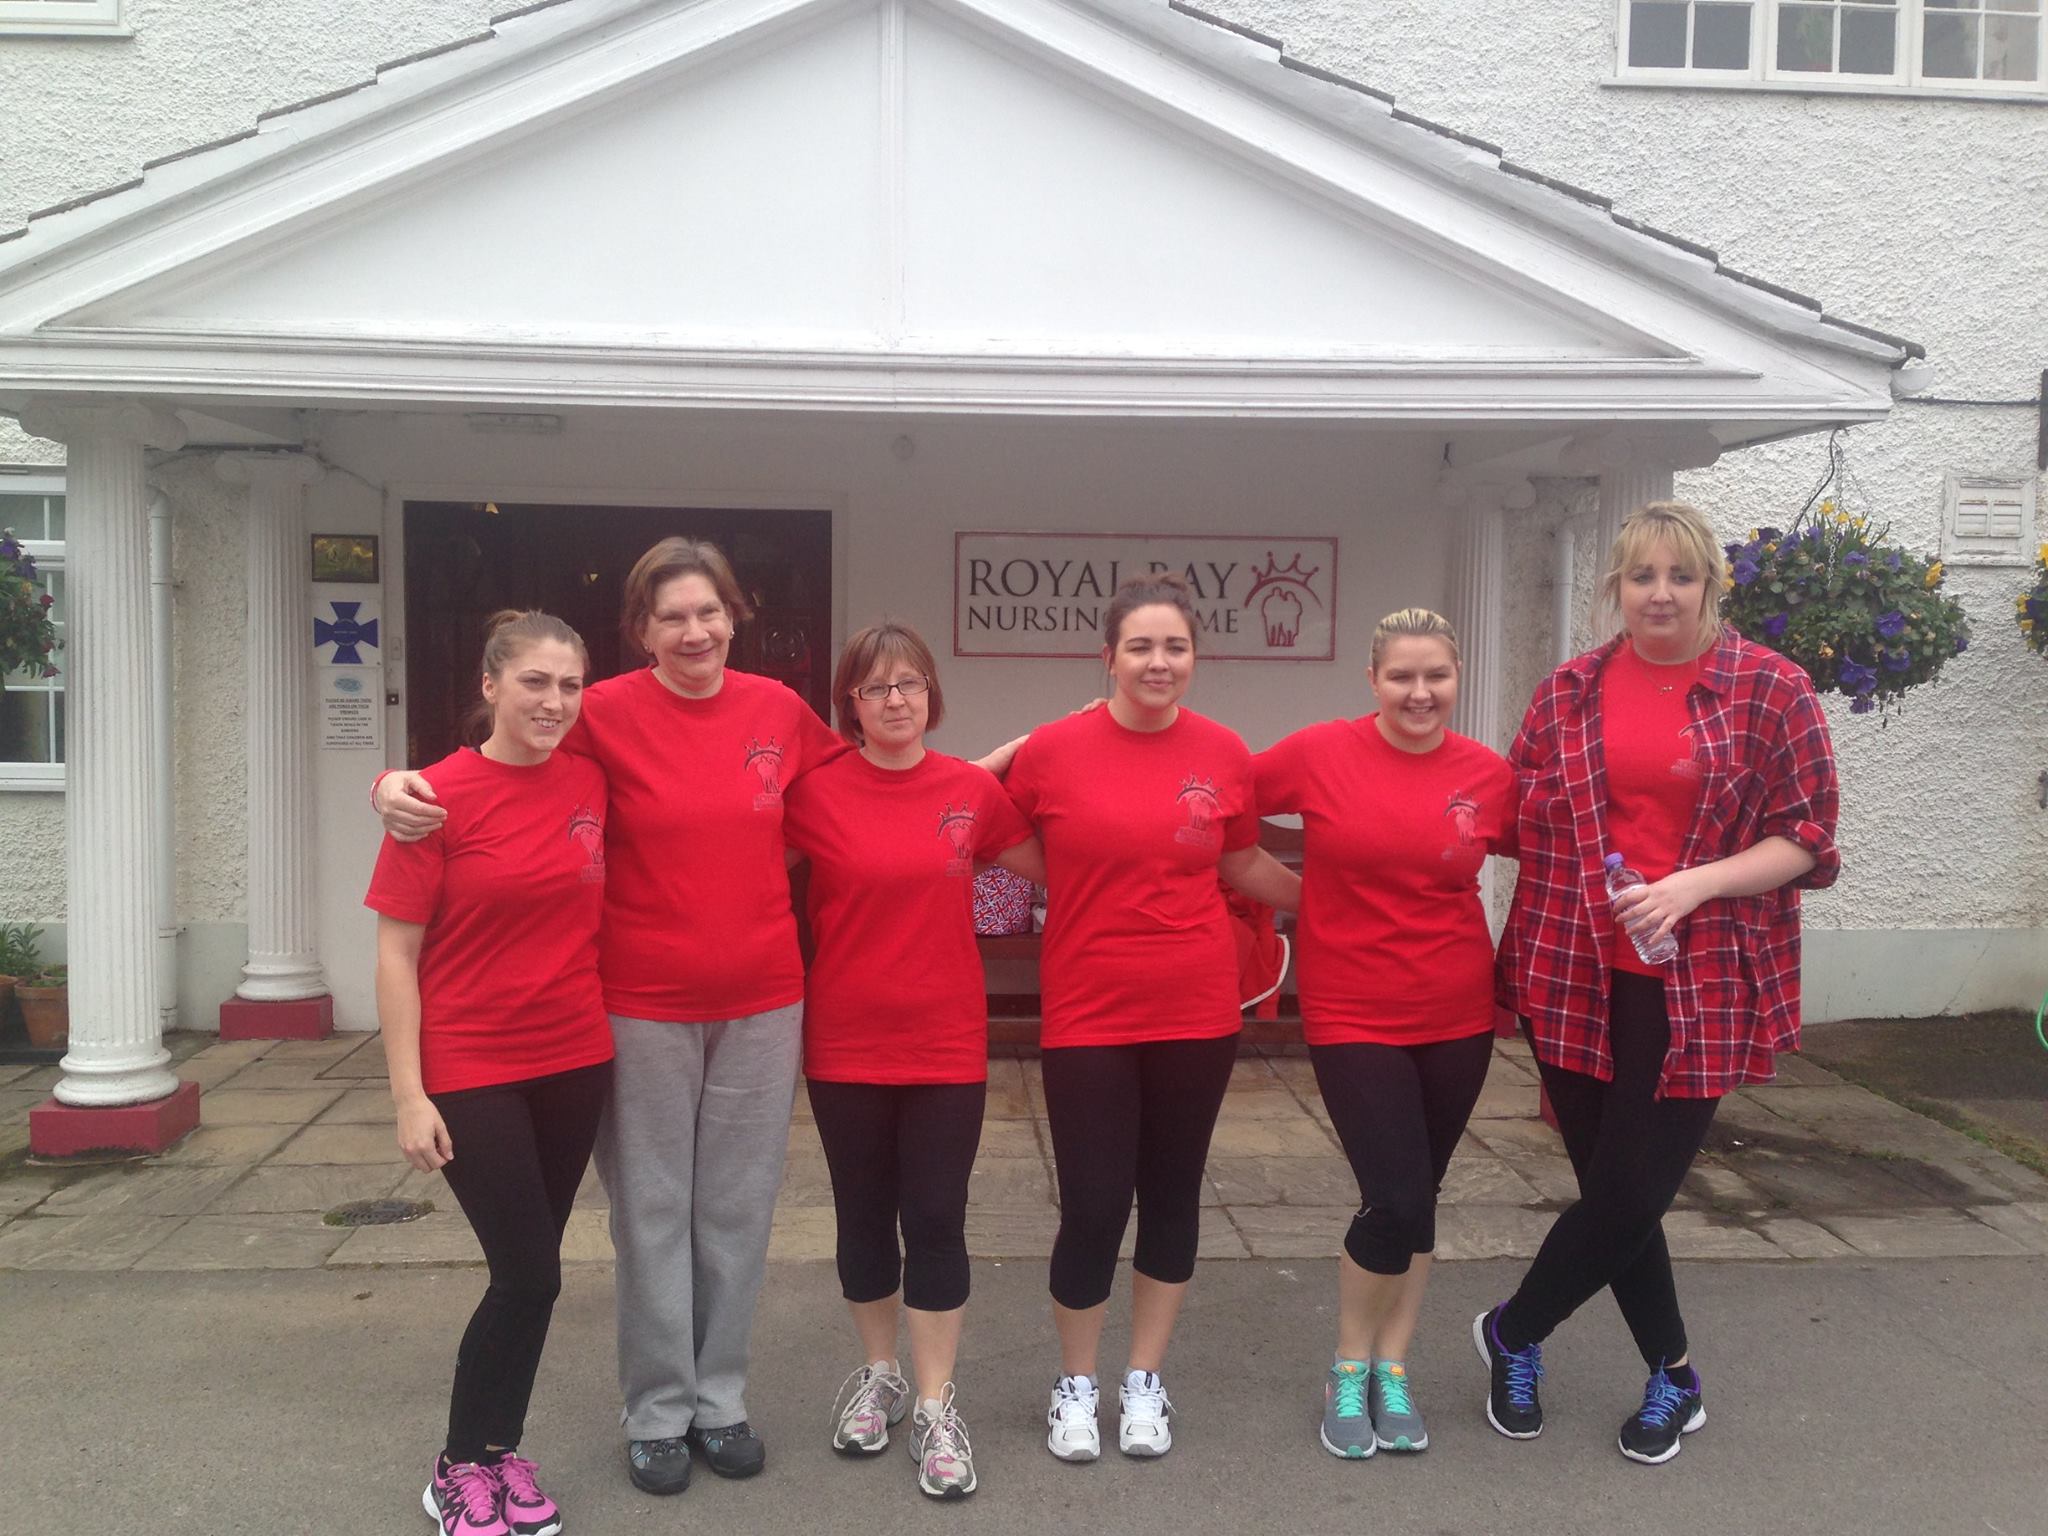 Royal Bay Nursing Home staff doing a 10K run